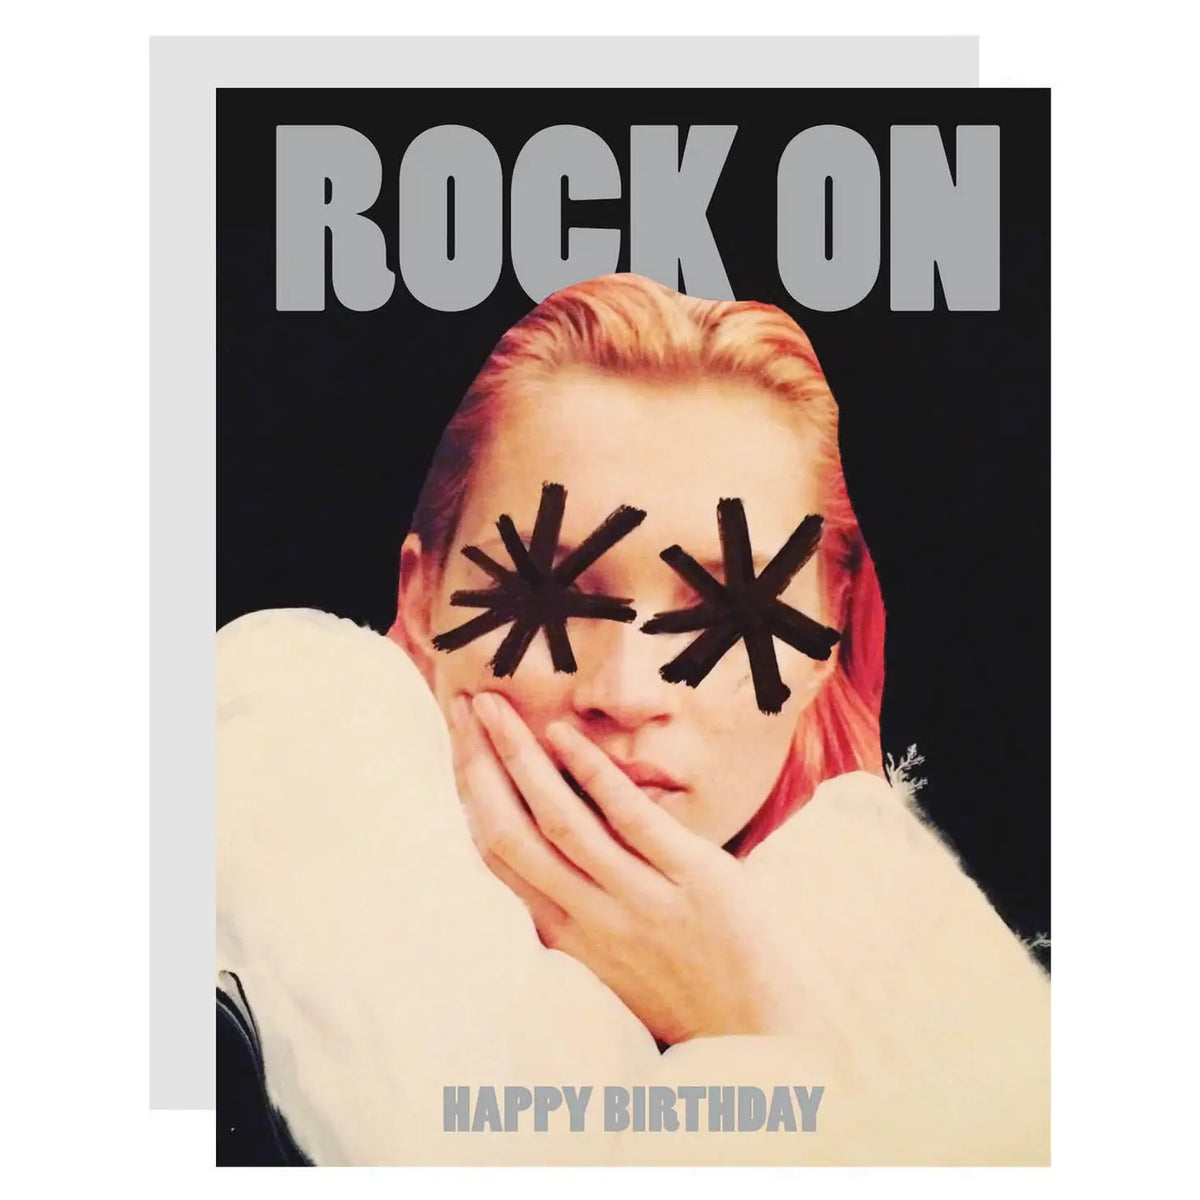 Rock On Happy Birthday Card - Carla Cards - Bluecashew Kitchen Homestead